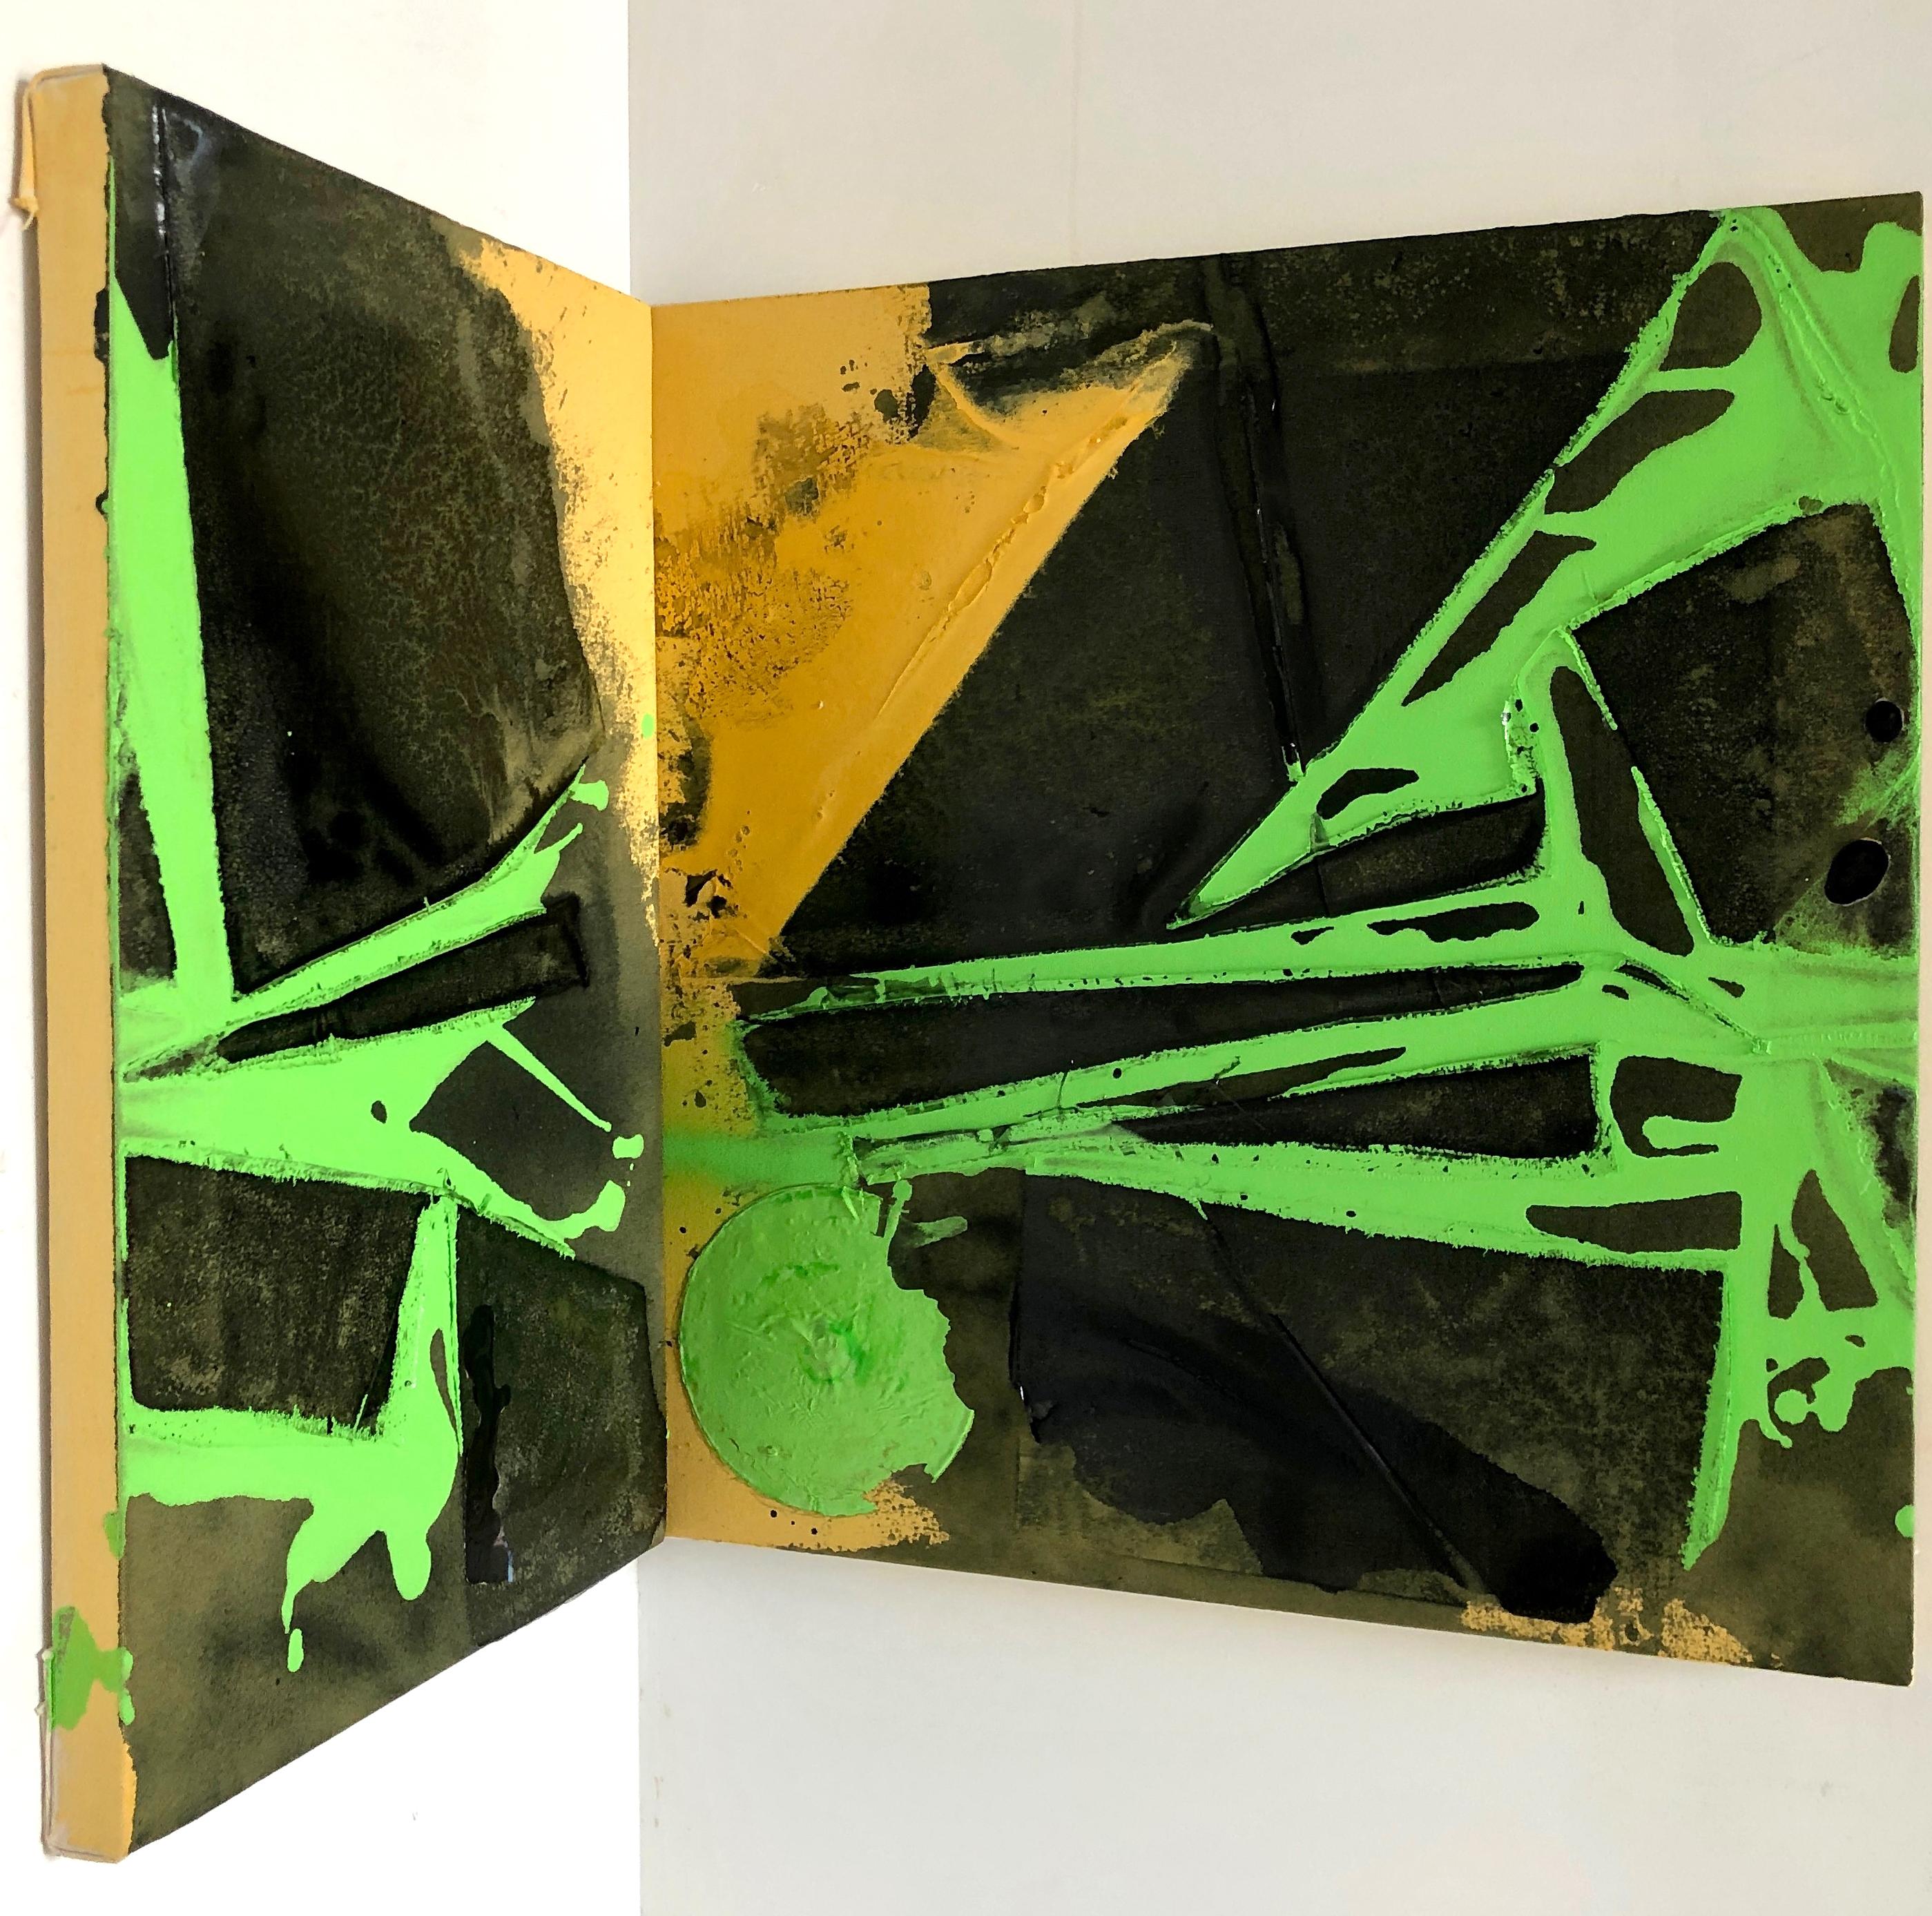 Jeffrey Kurland Landscape Painting - "CORNER POCKET", Abstract Painting, Naples Yellow, Green, Black, Dynamic Angle